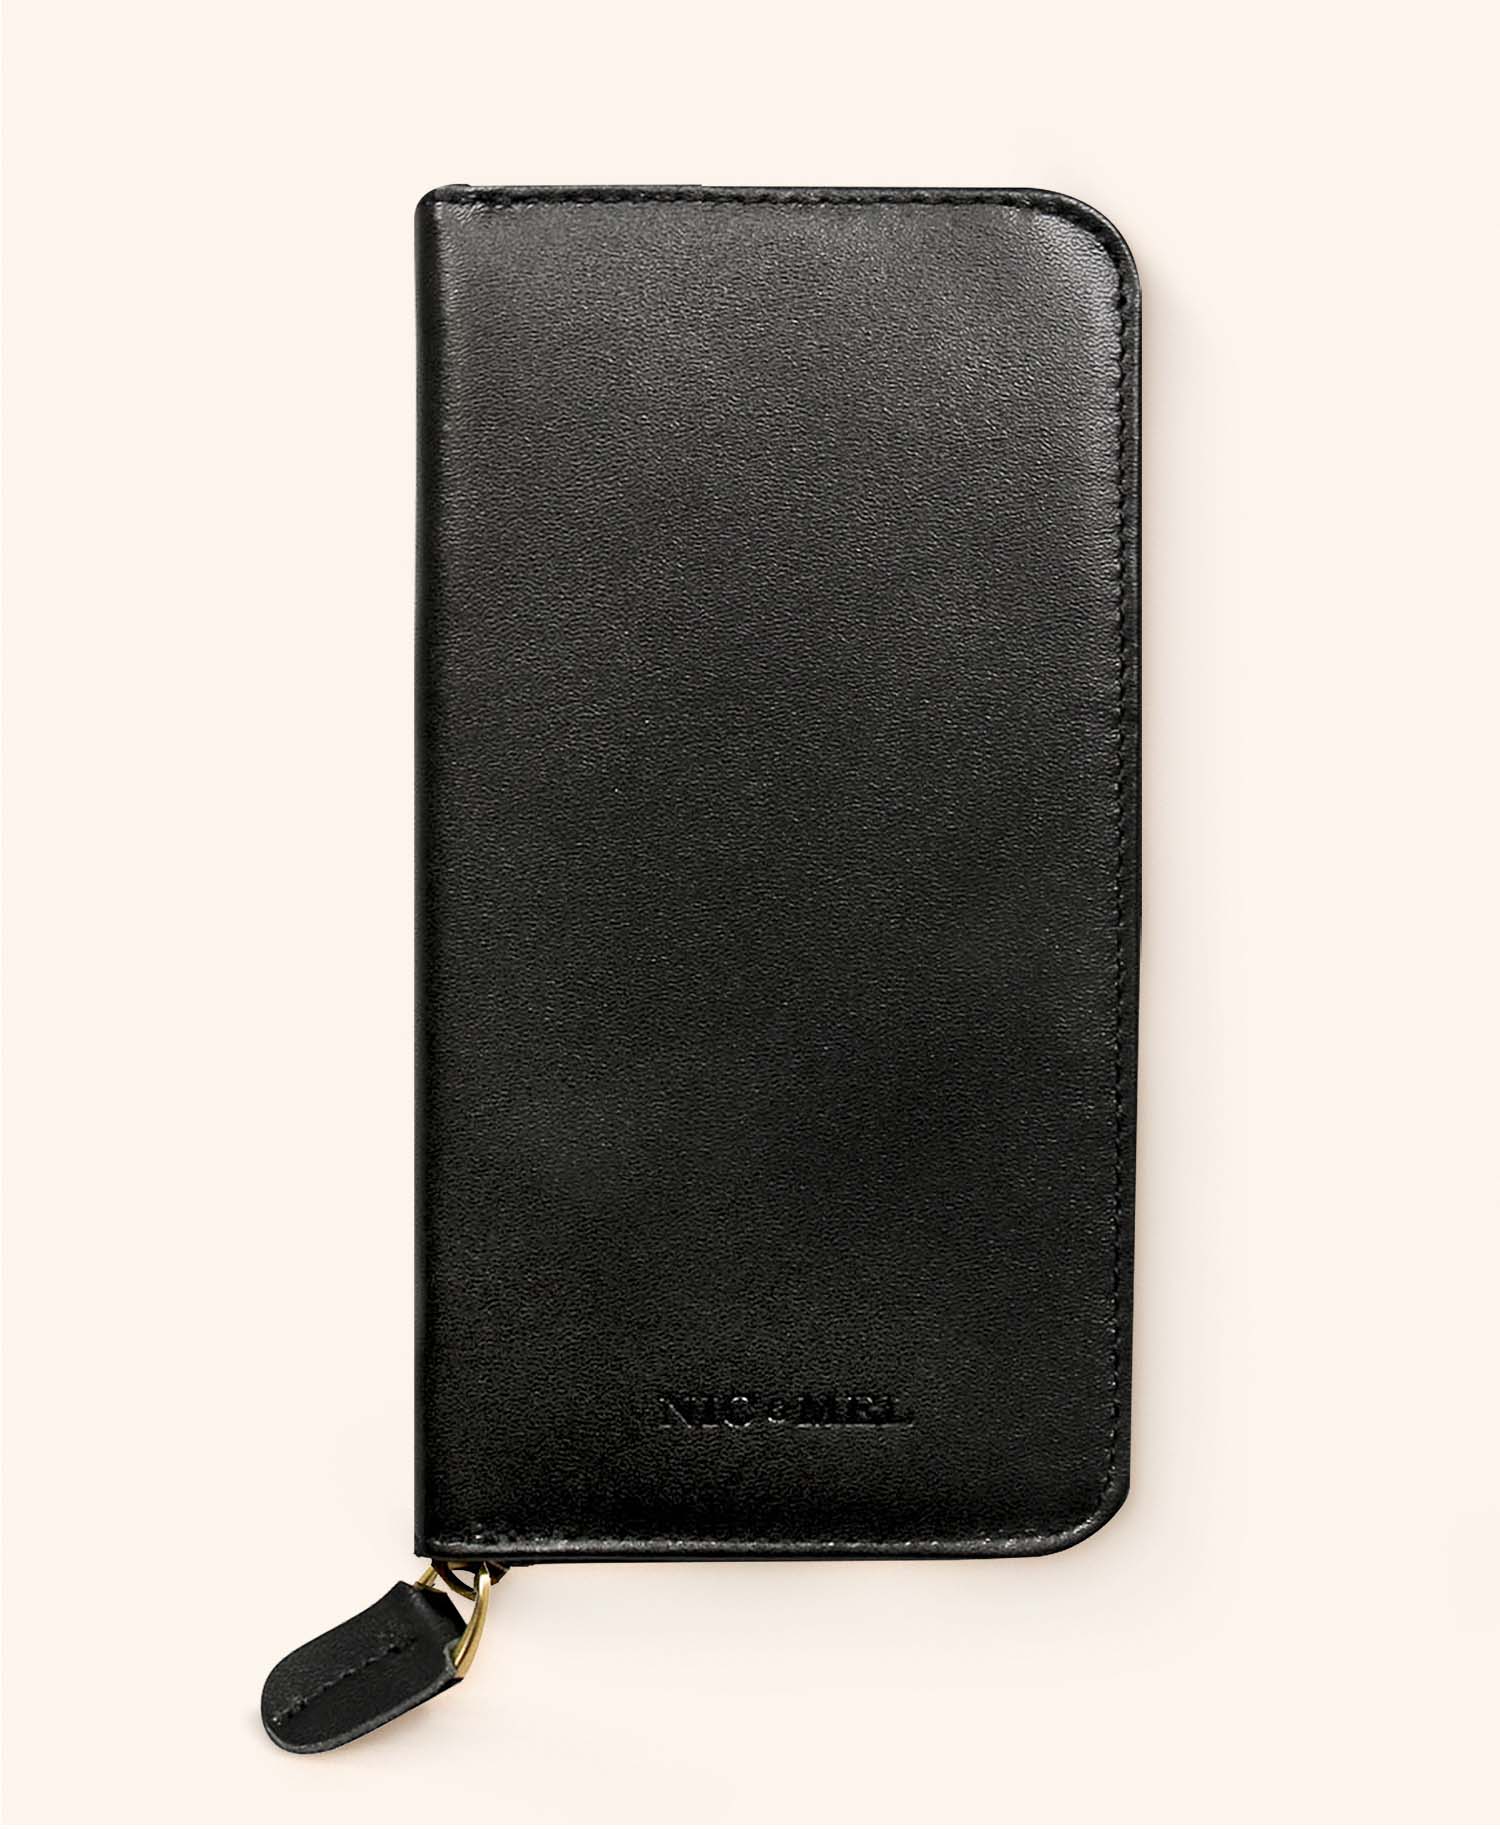 Greg black wallet iphone 11 Pro Max